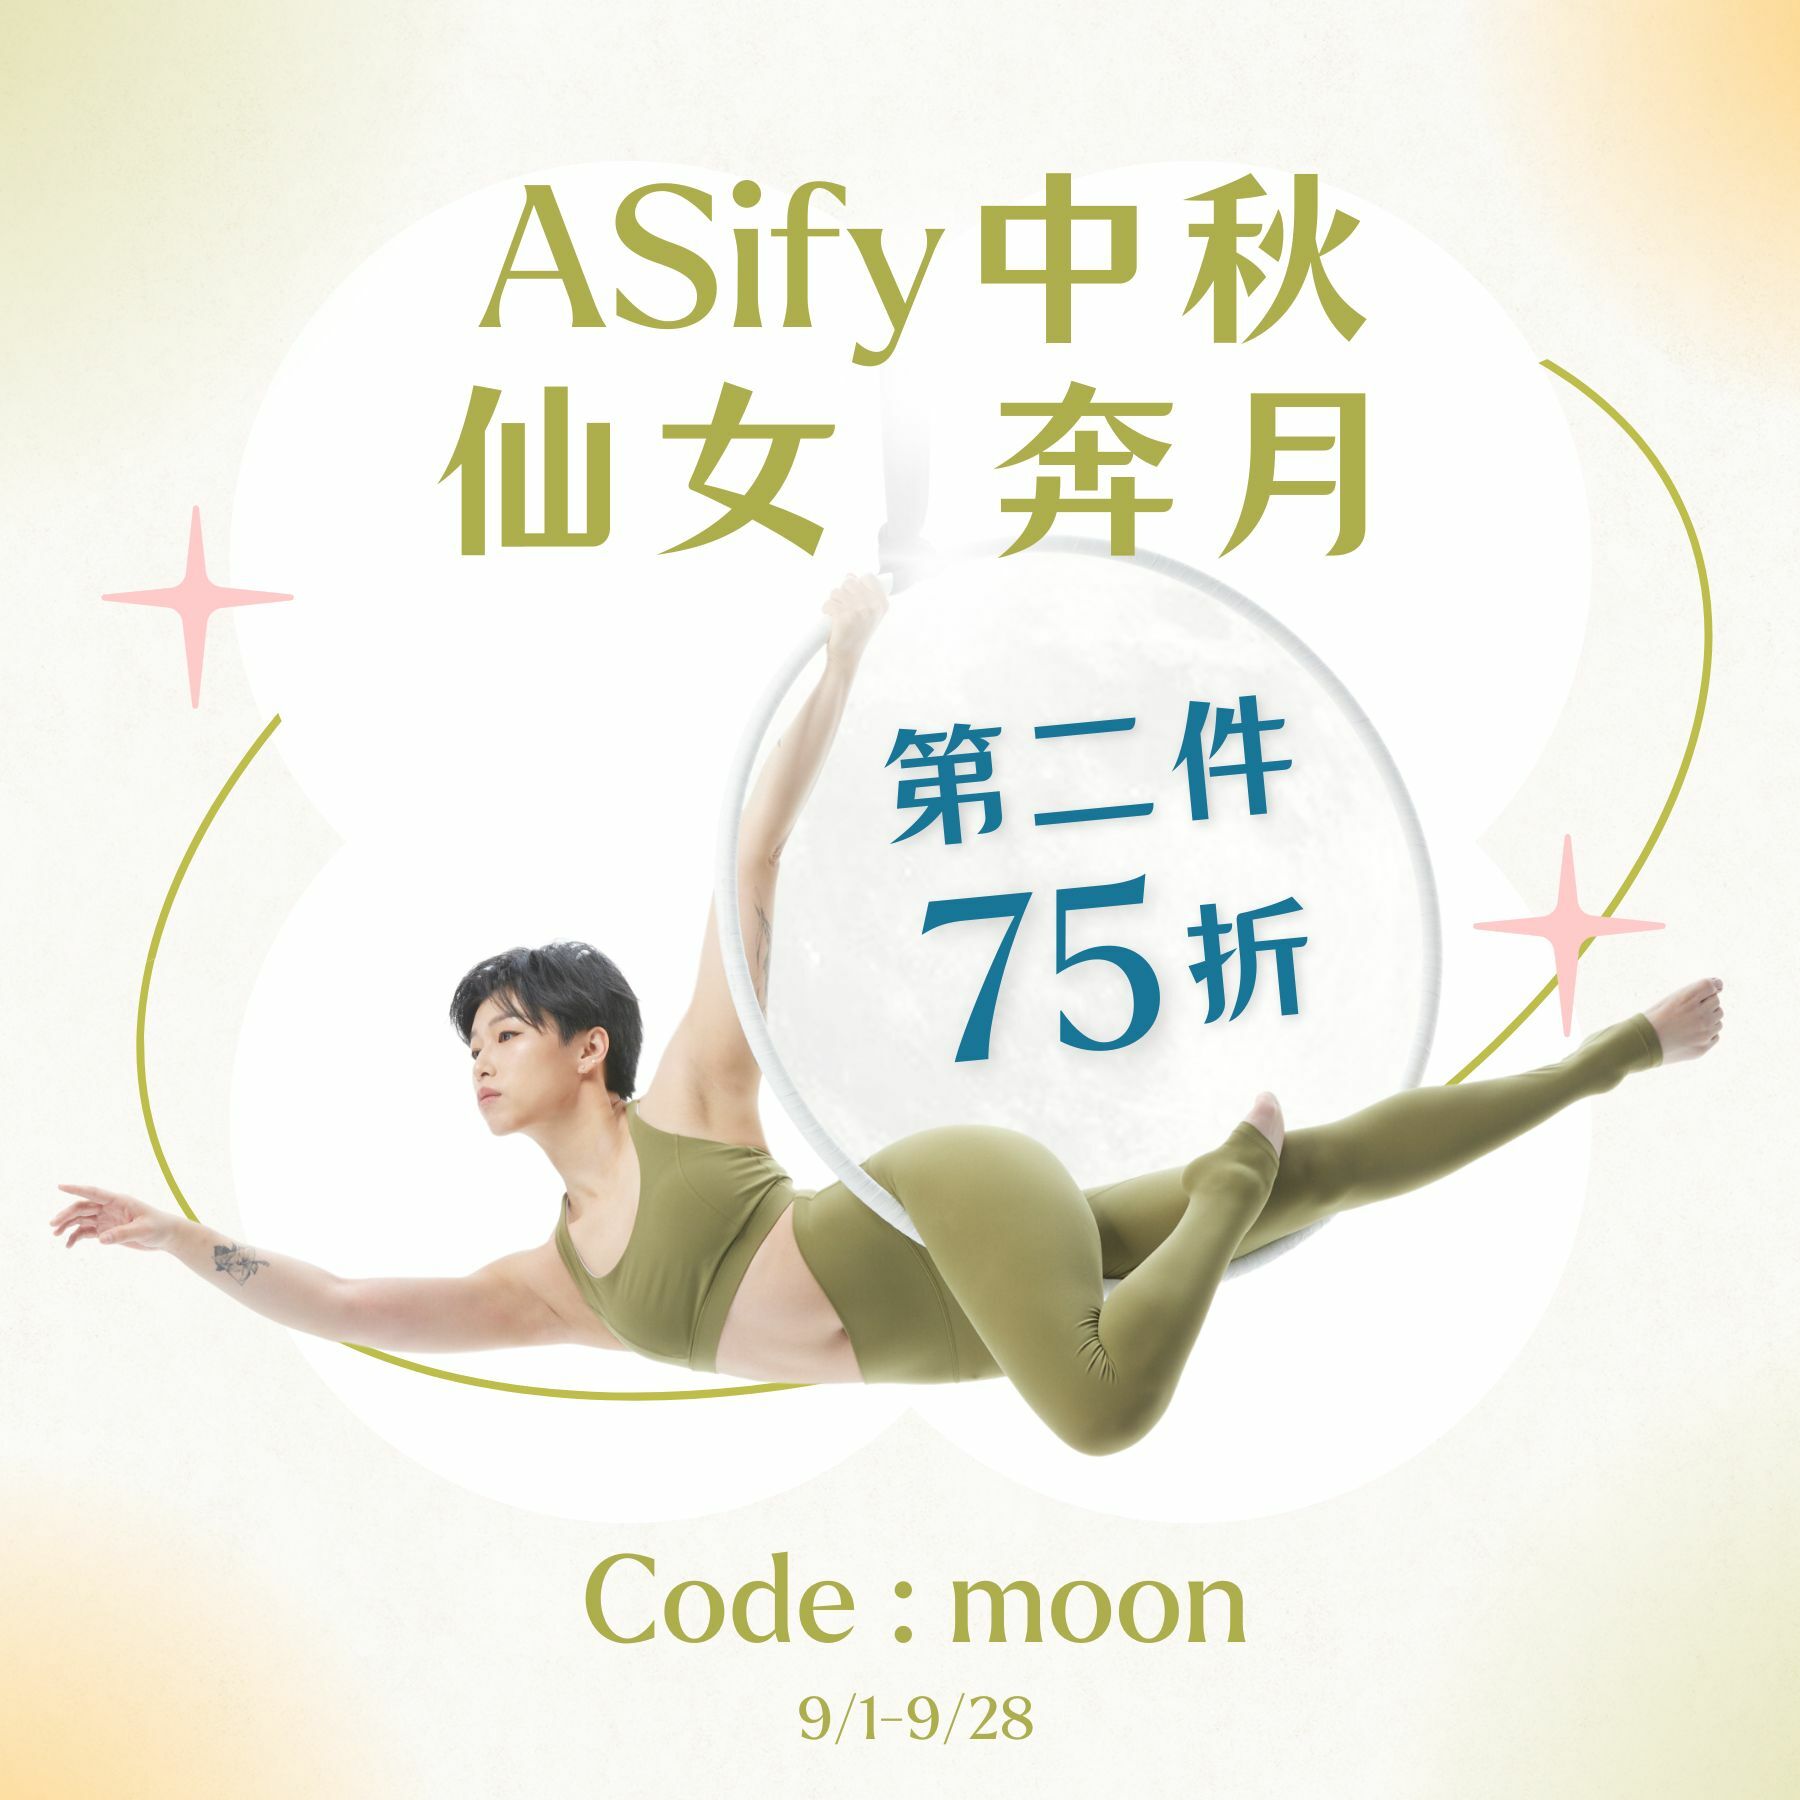 ASify瑜珈運動服飾中秋節活動